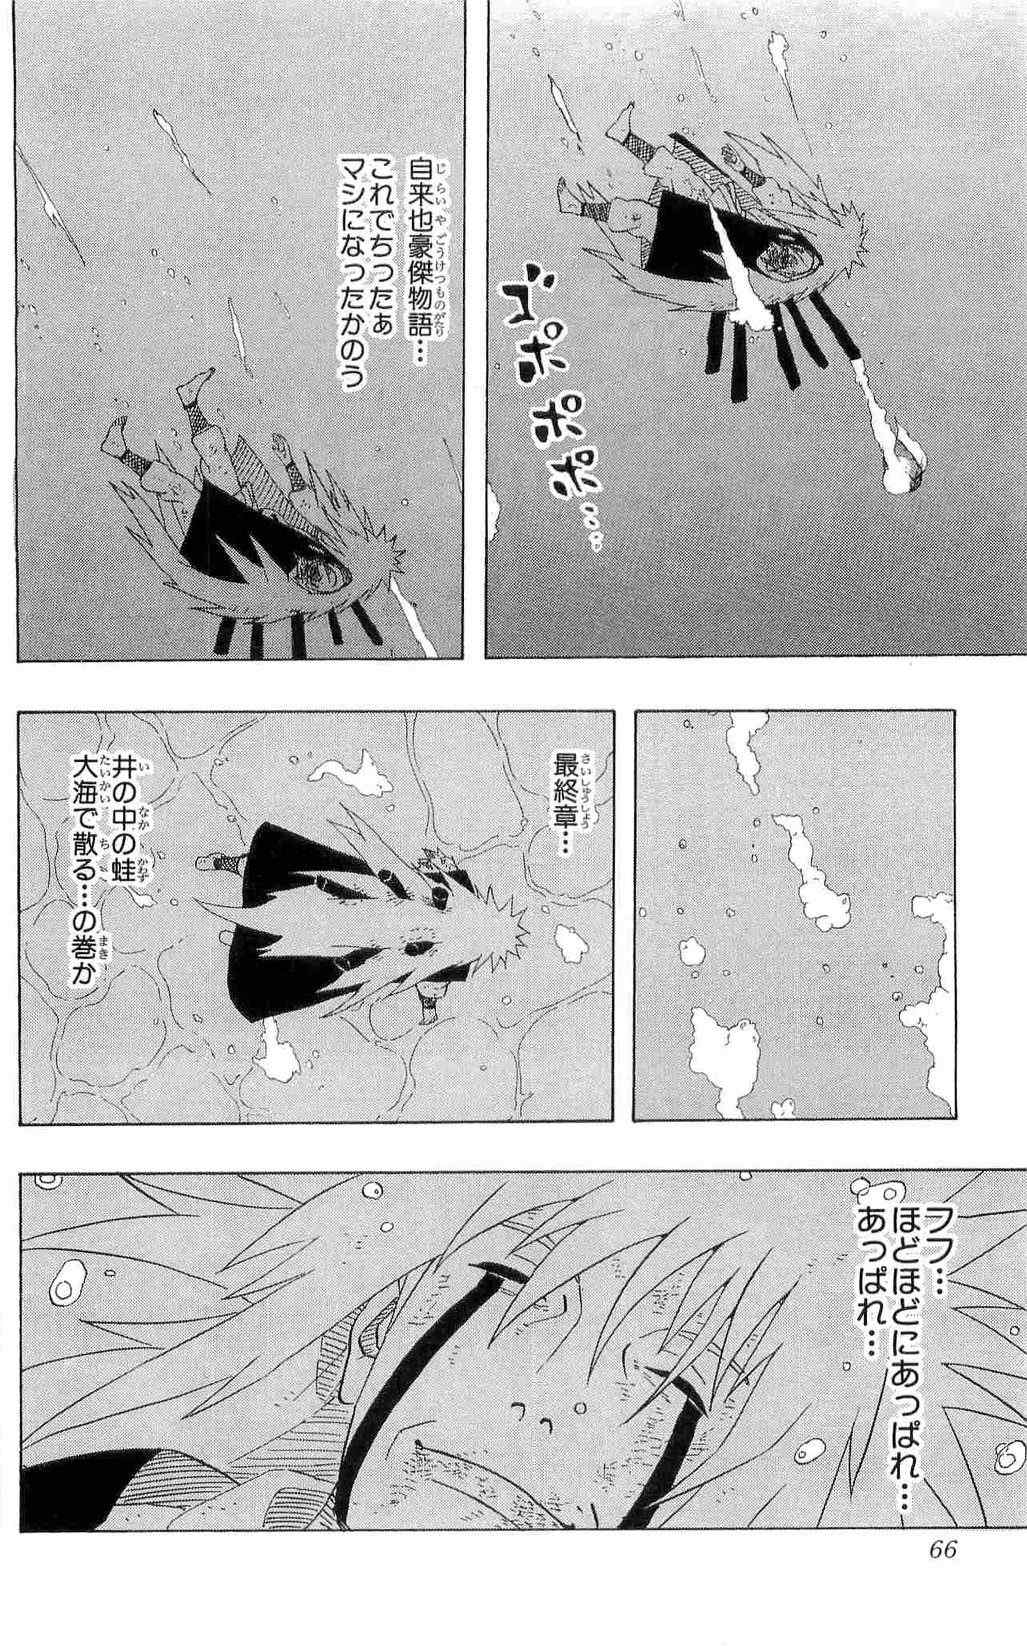 《NARUTO-ナルト-(日文)》漫画 NARUTO 42卷